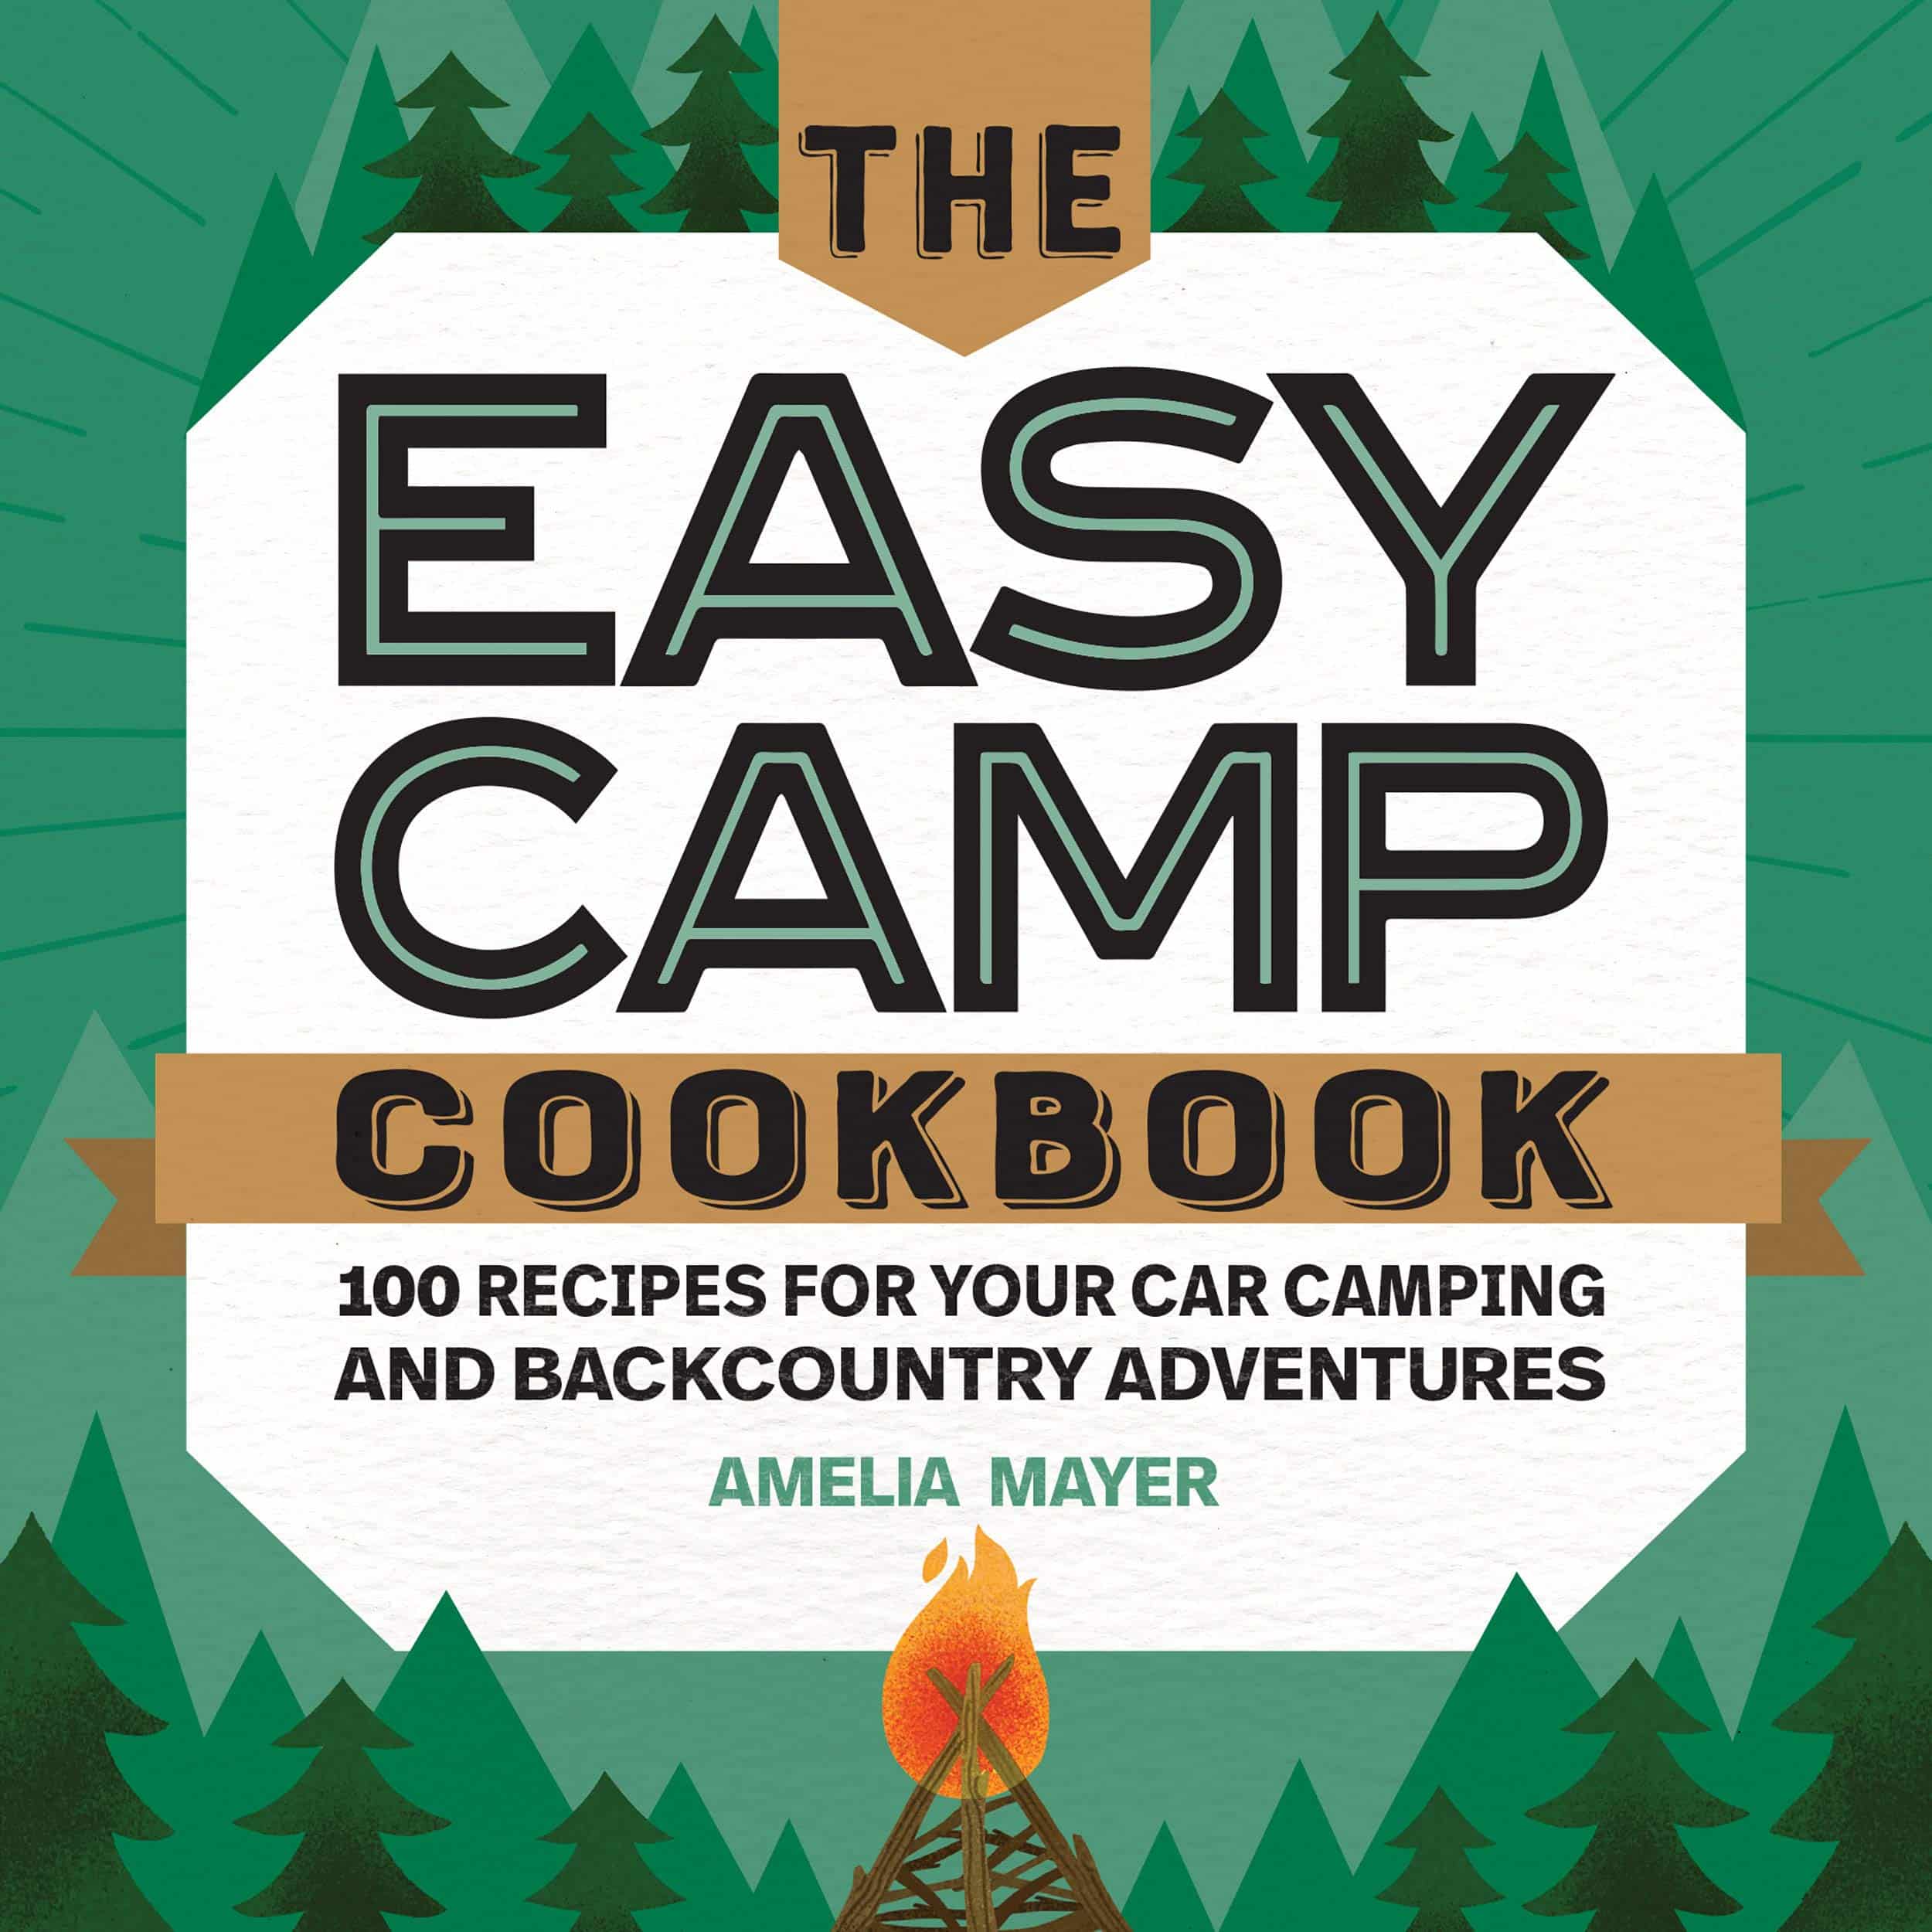 A Complete Camp Cookbook